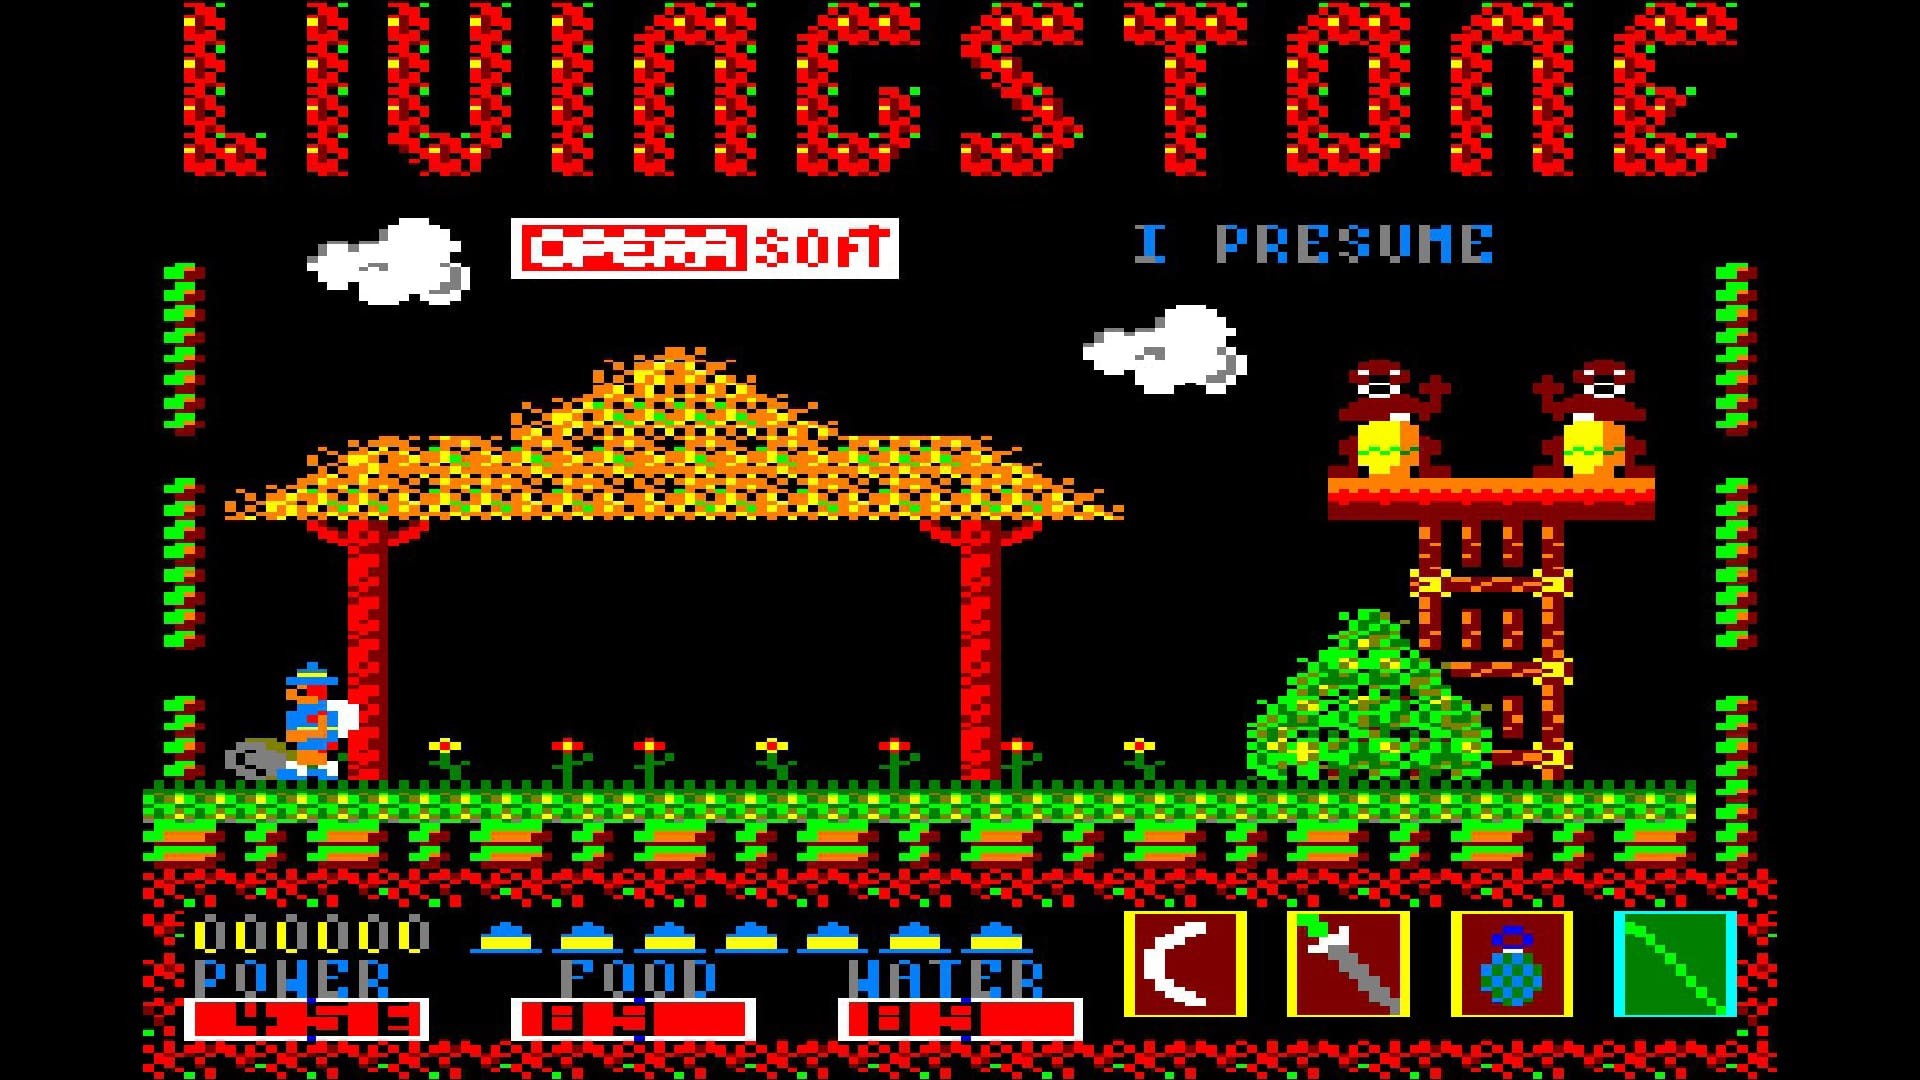 Retro Golden Age - Livingstone I Presume Steam CD Key 3.38 $